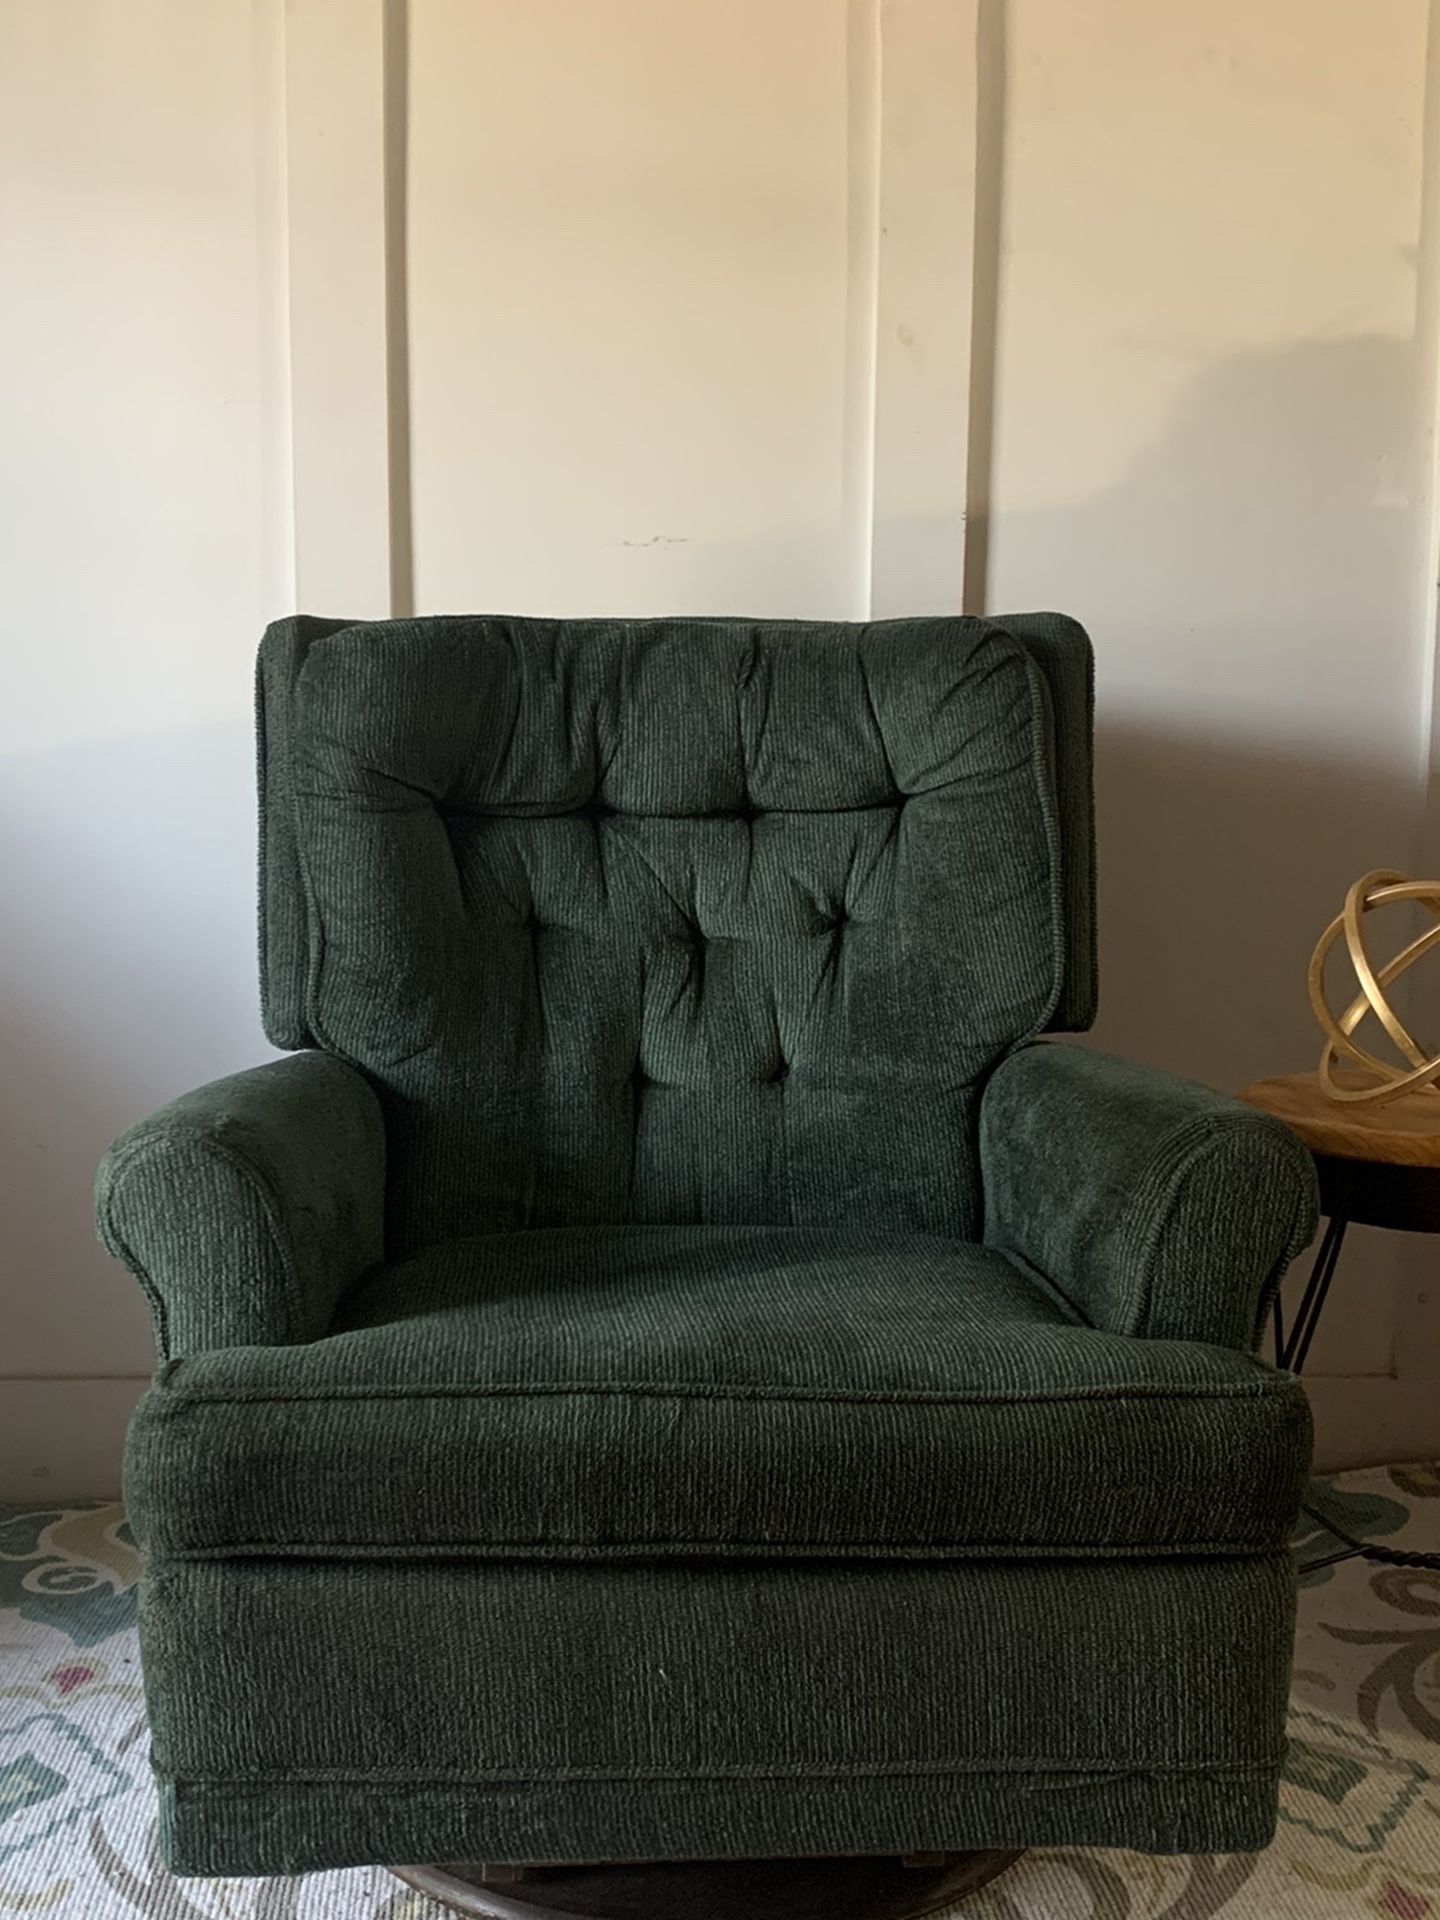 Teal/Green Mid Century Modern Rocking Chair $120